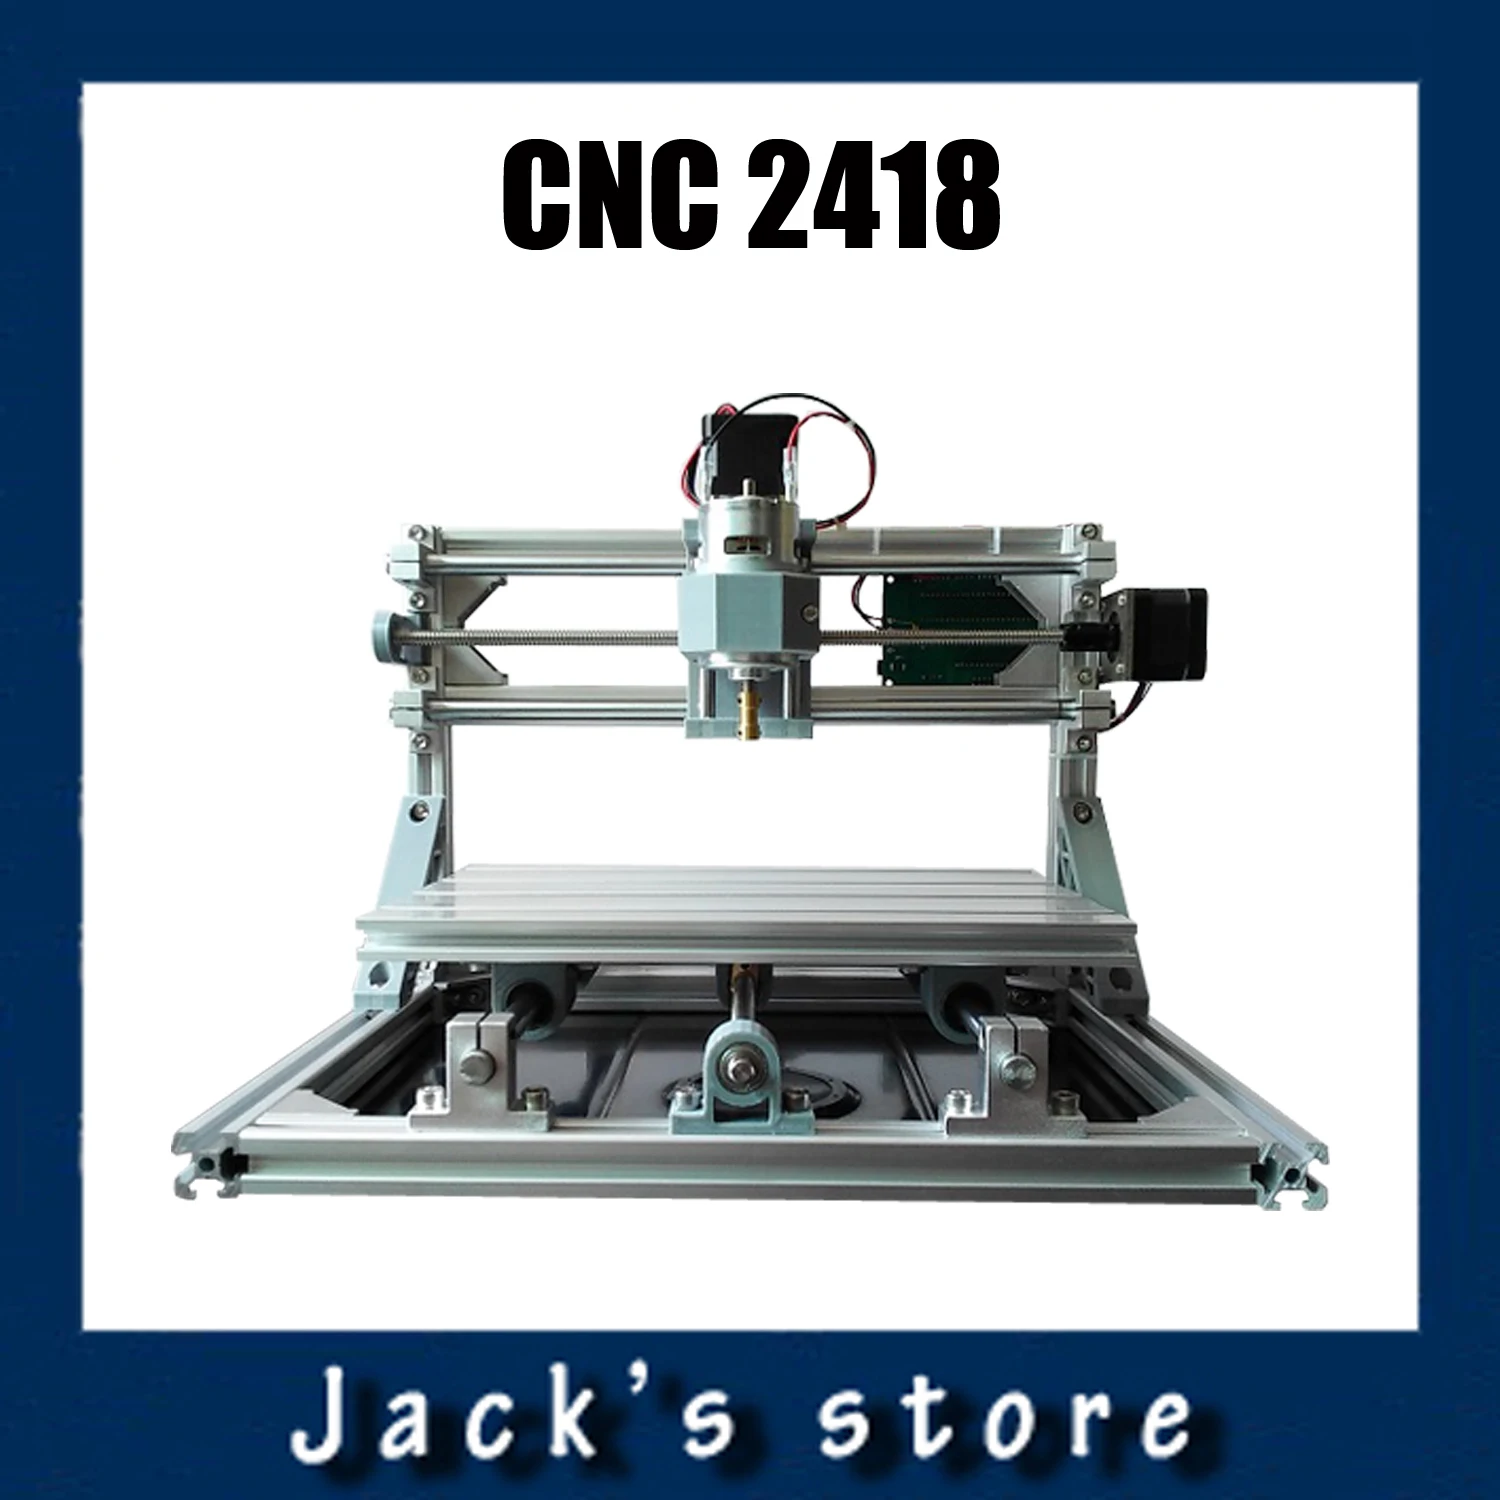 cnc 2418 (laser options),diy cnc engraving machine,mini Pcb Milling Machine,Wood Carving machine,cnc router,cnc2418,grbl control